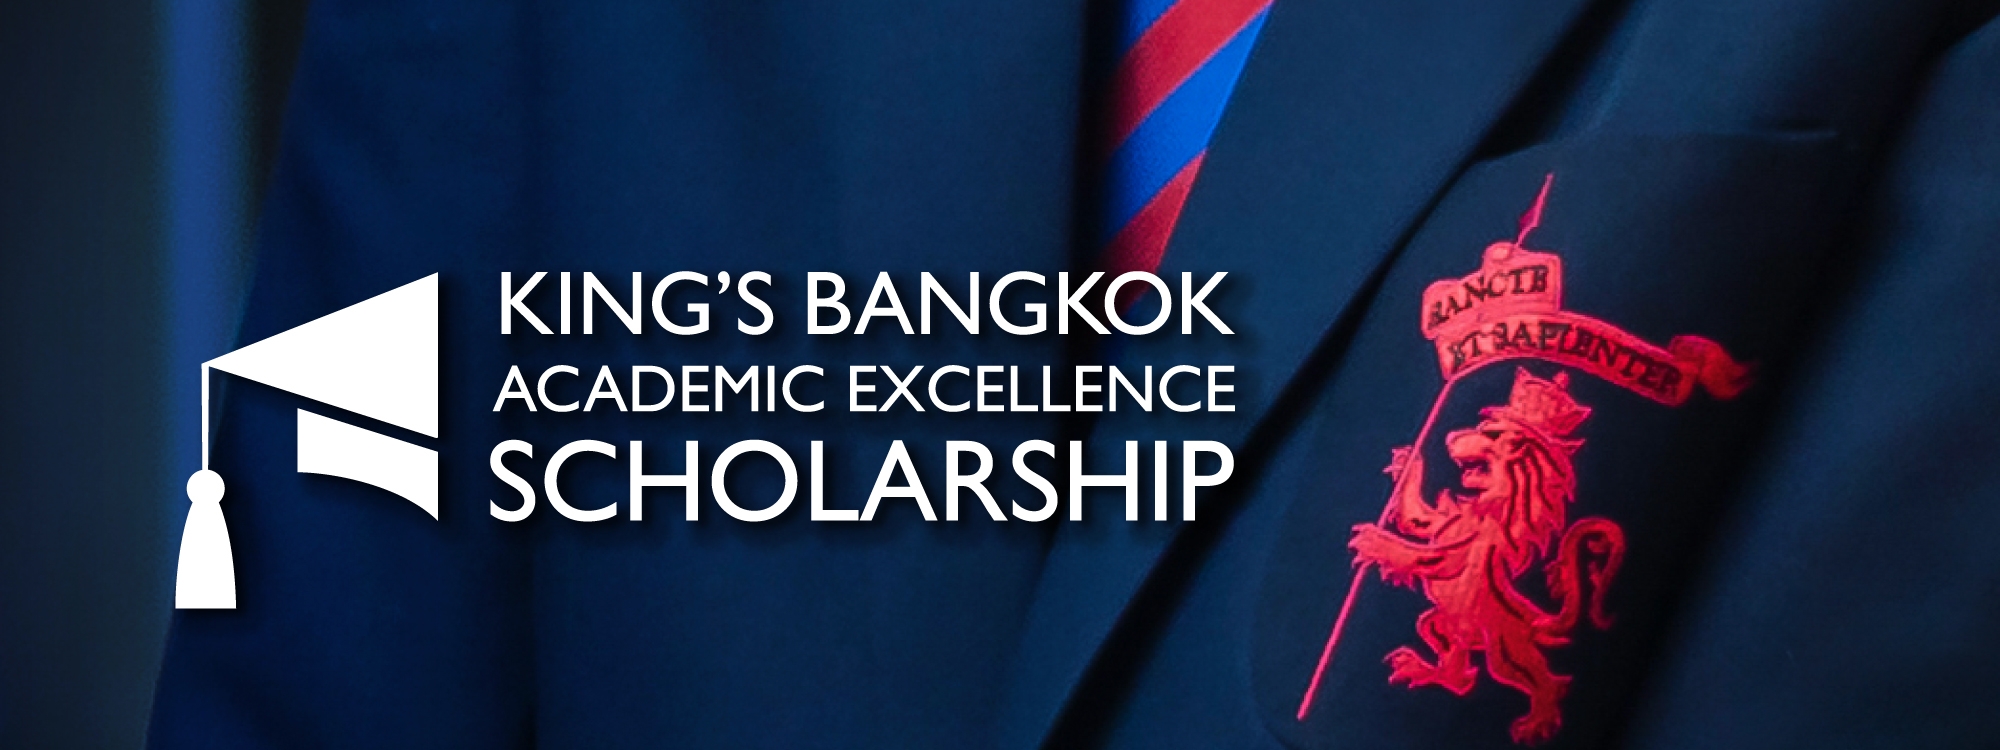 King’s Bangkok Academic Excellence Scholarship